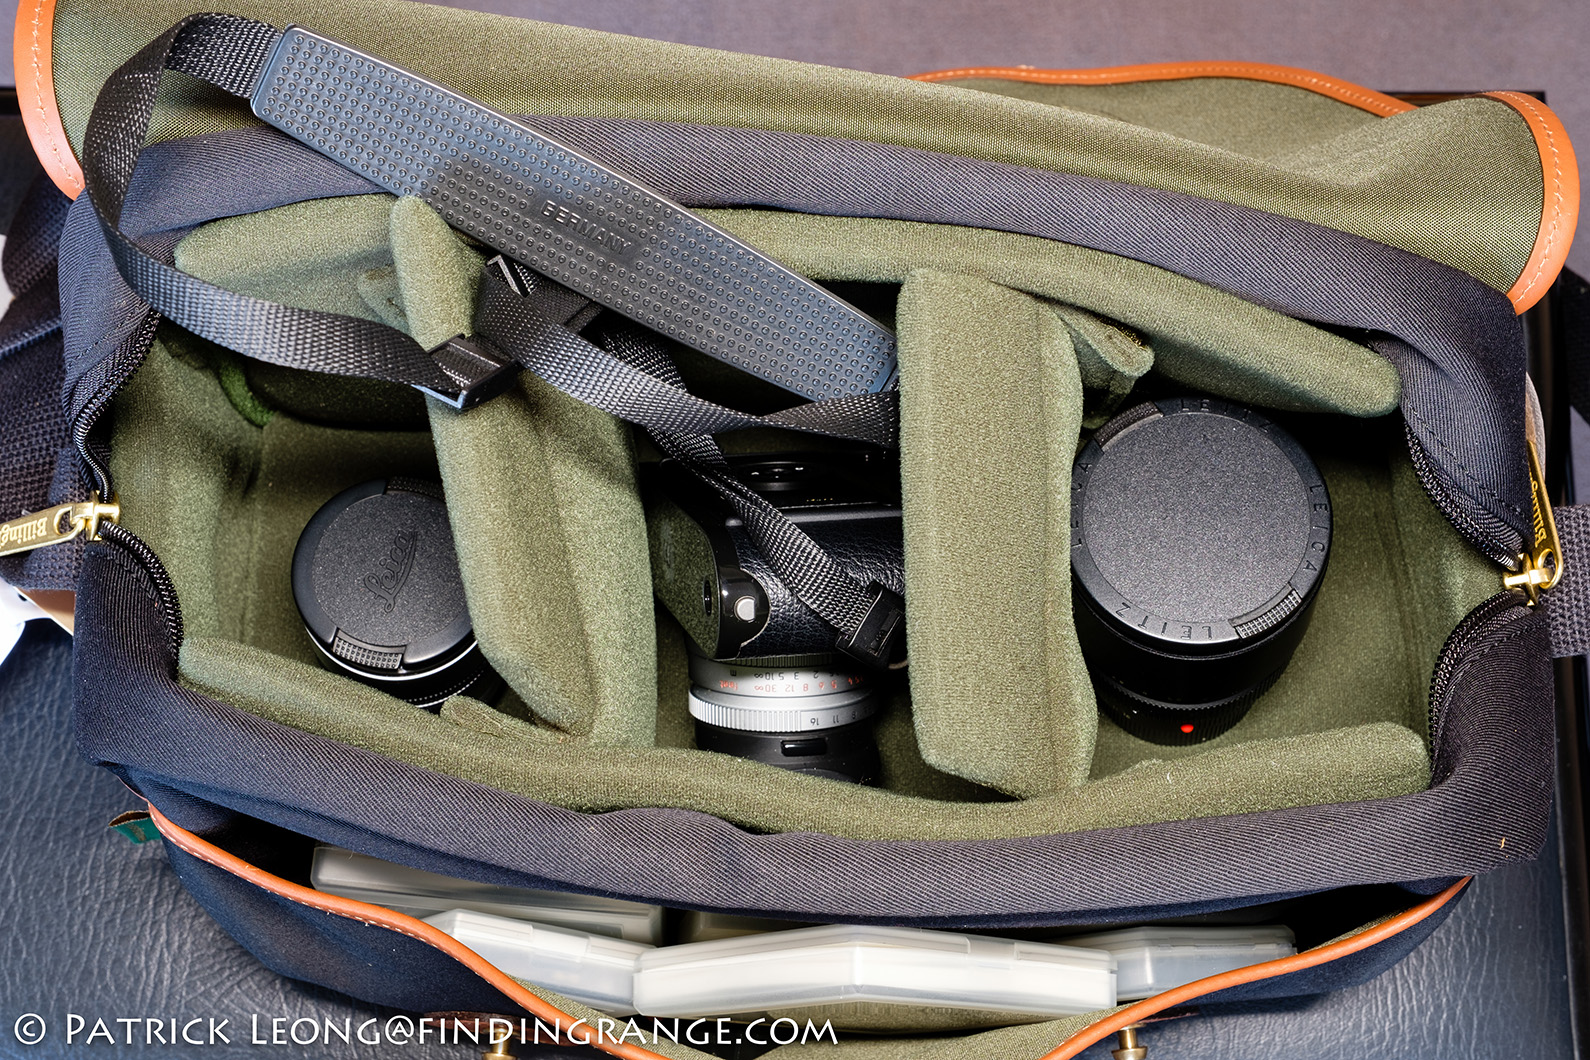 Billingham S4 Camera Bag - Khaki Canvas / Tan Leather – Billingham USA